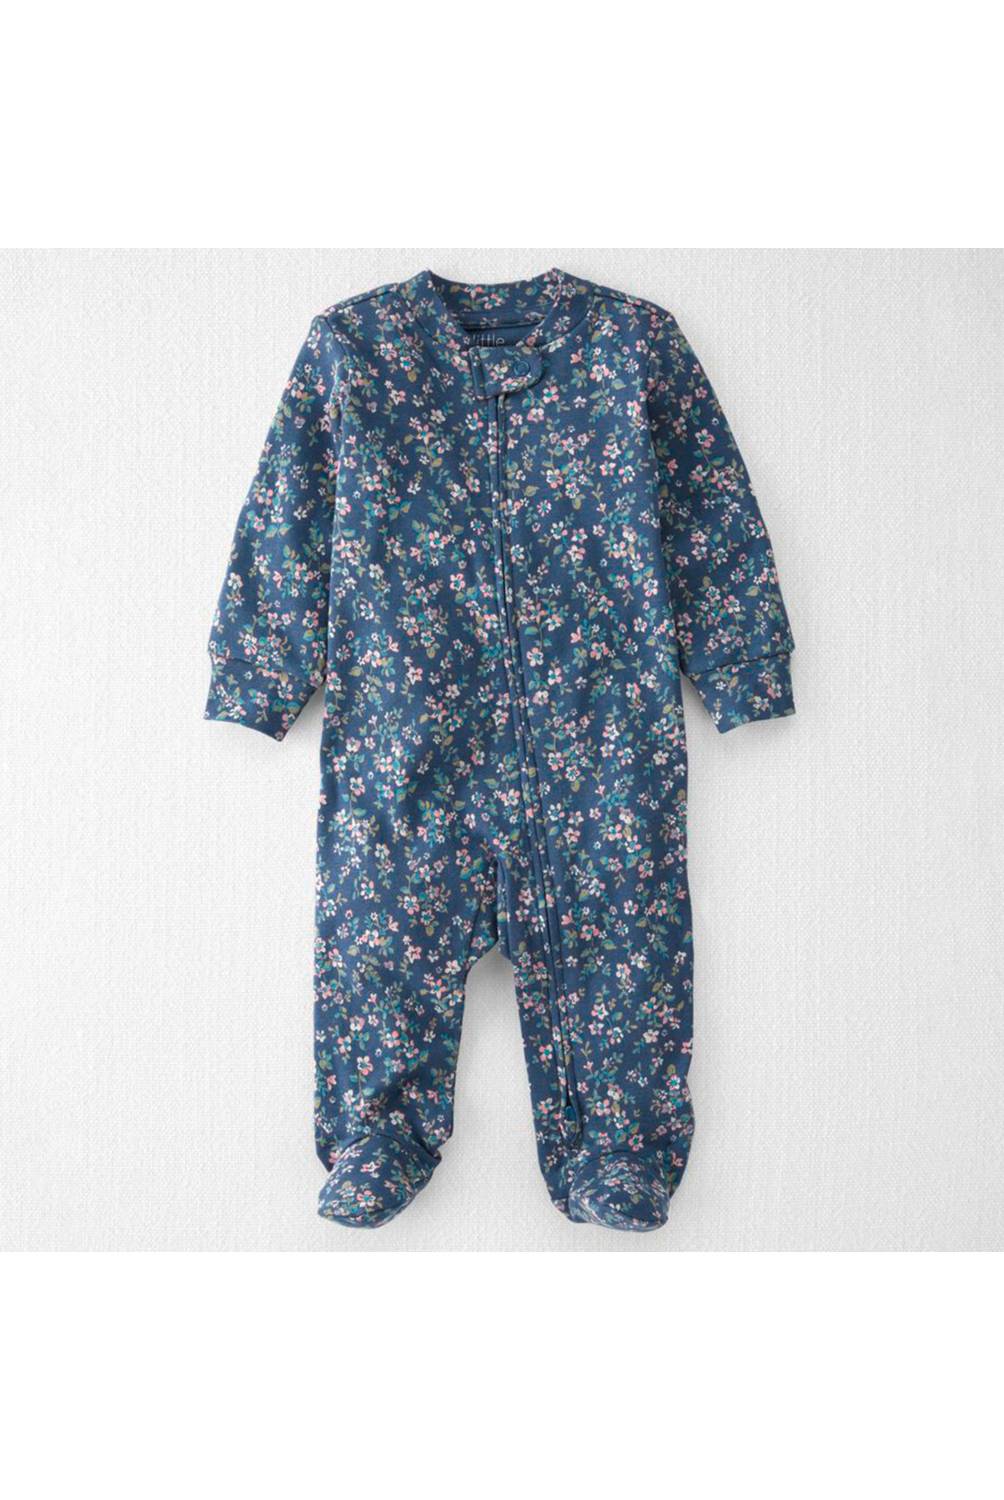 Pijama largo 100% algodón estampado flores